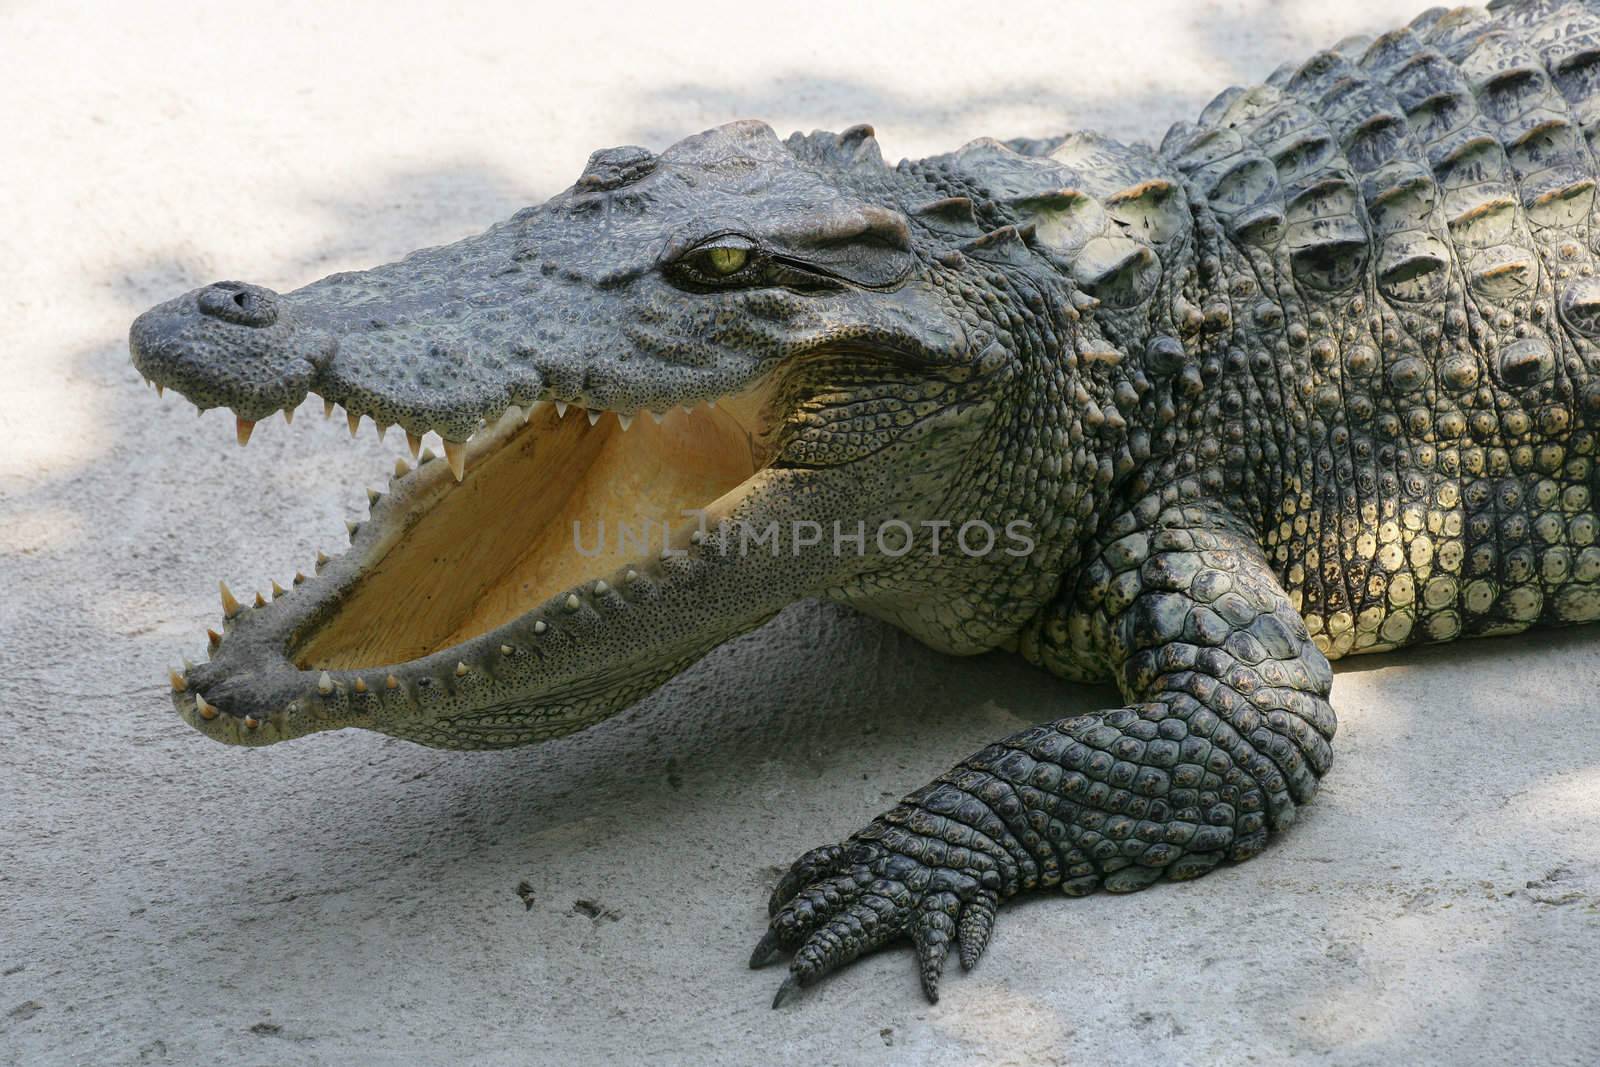 A crocodile in Thailand.
